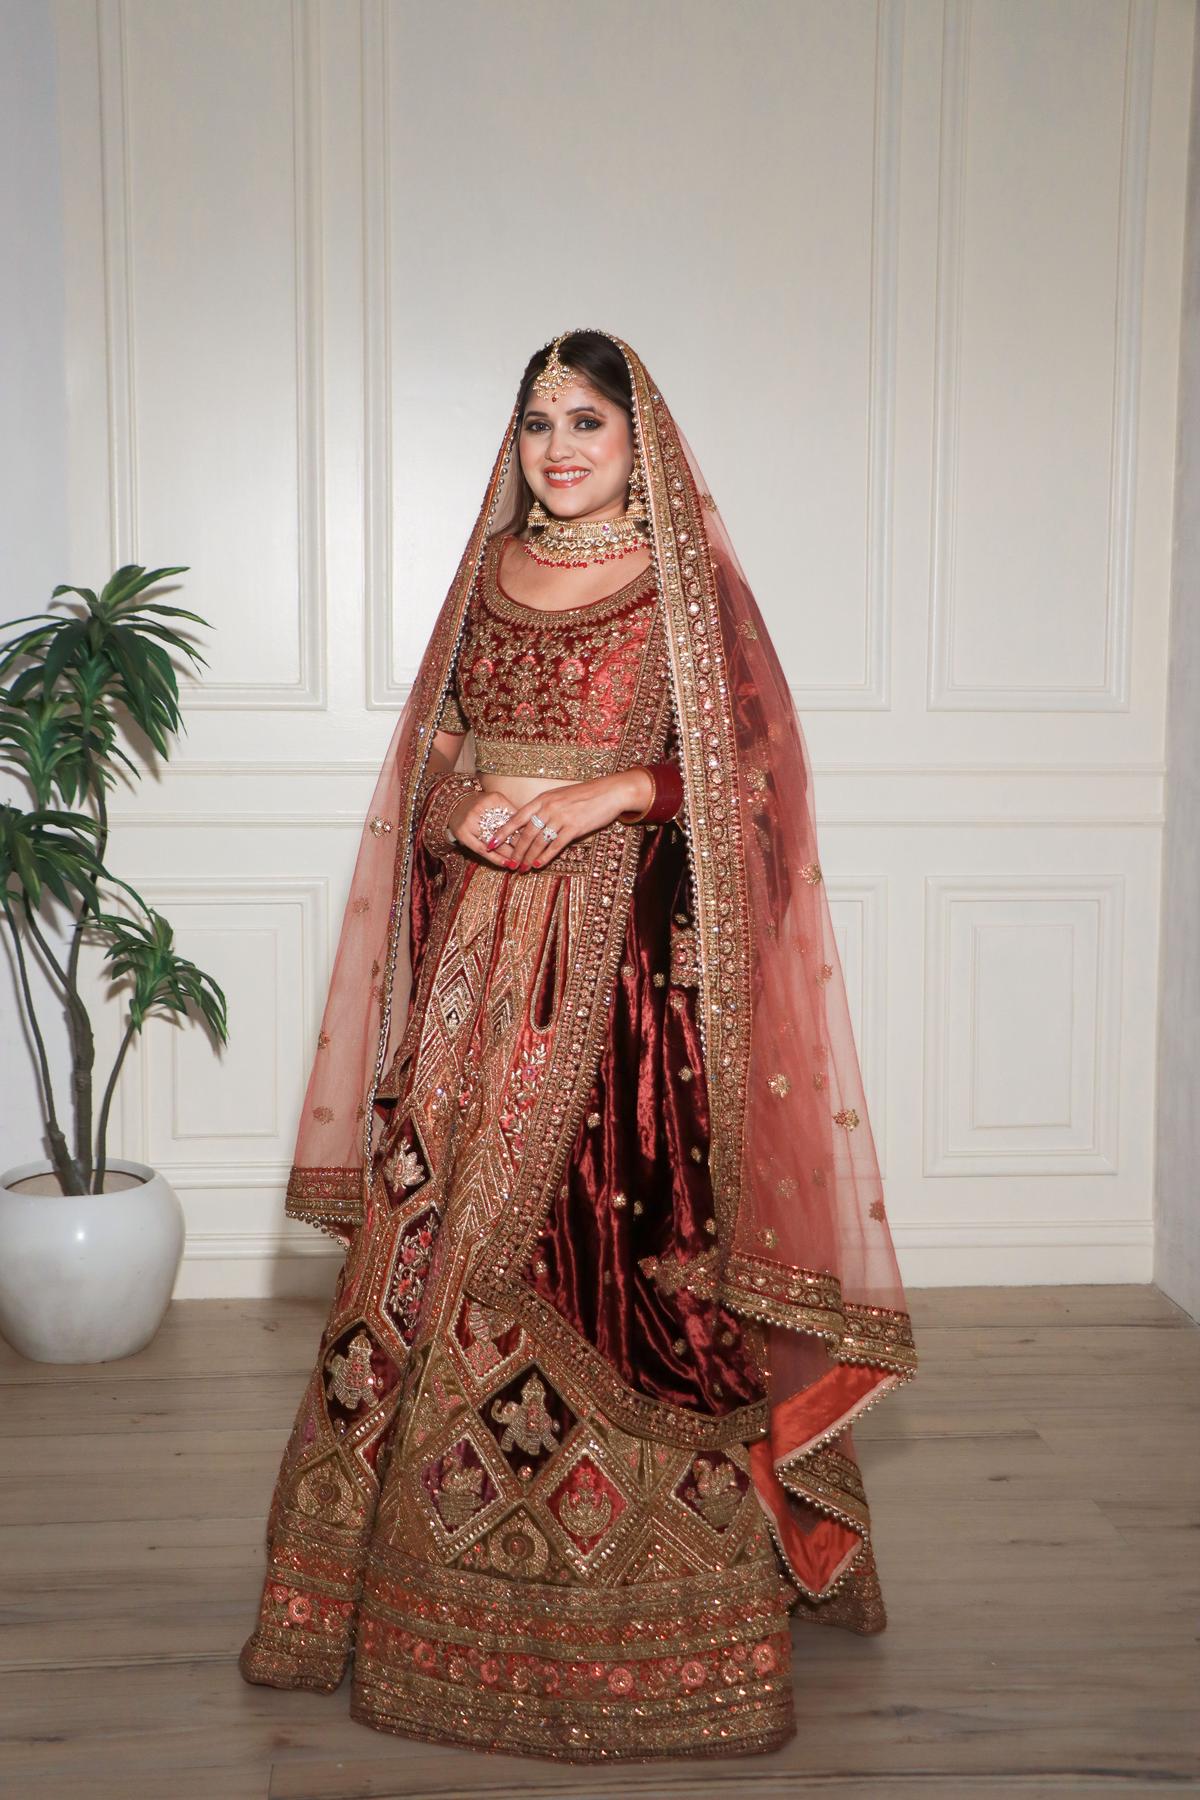 Top Stunning walima Dresses For Brides - Wedding Dress Designs For Walima |  Bridal Dresses 202… | Pakistani bridal wear, Latest bridal lehenga, Indian  wedding dress